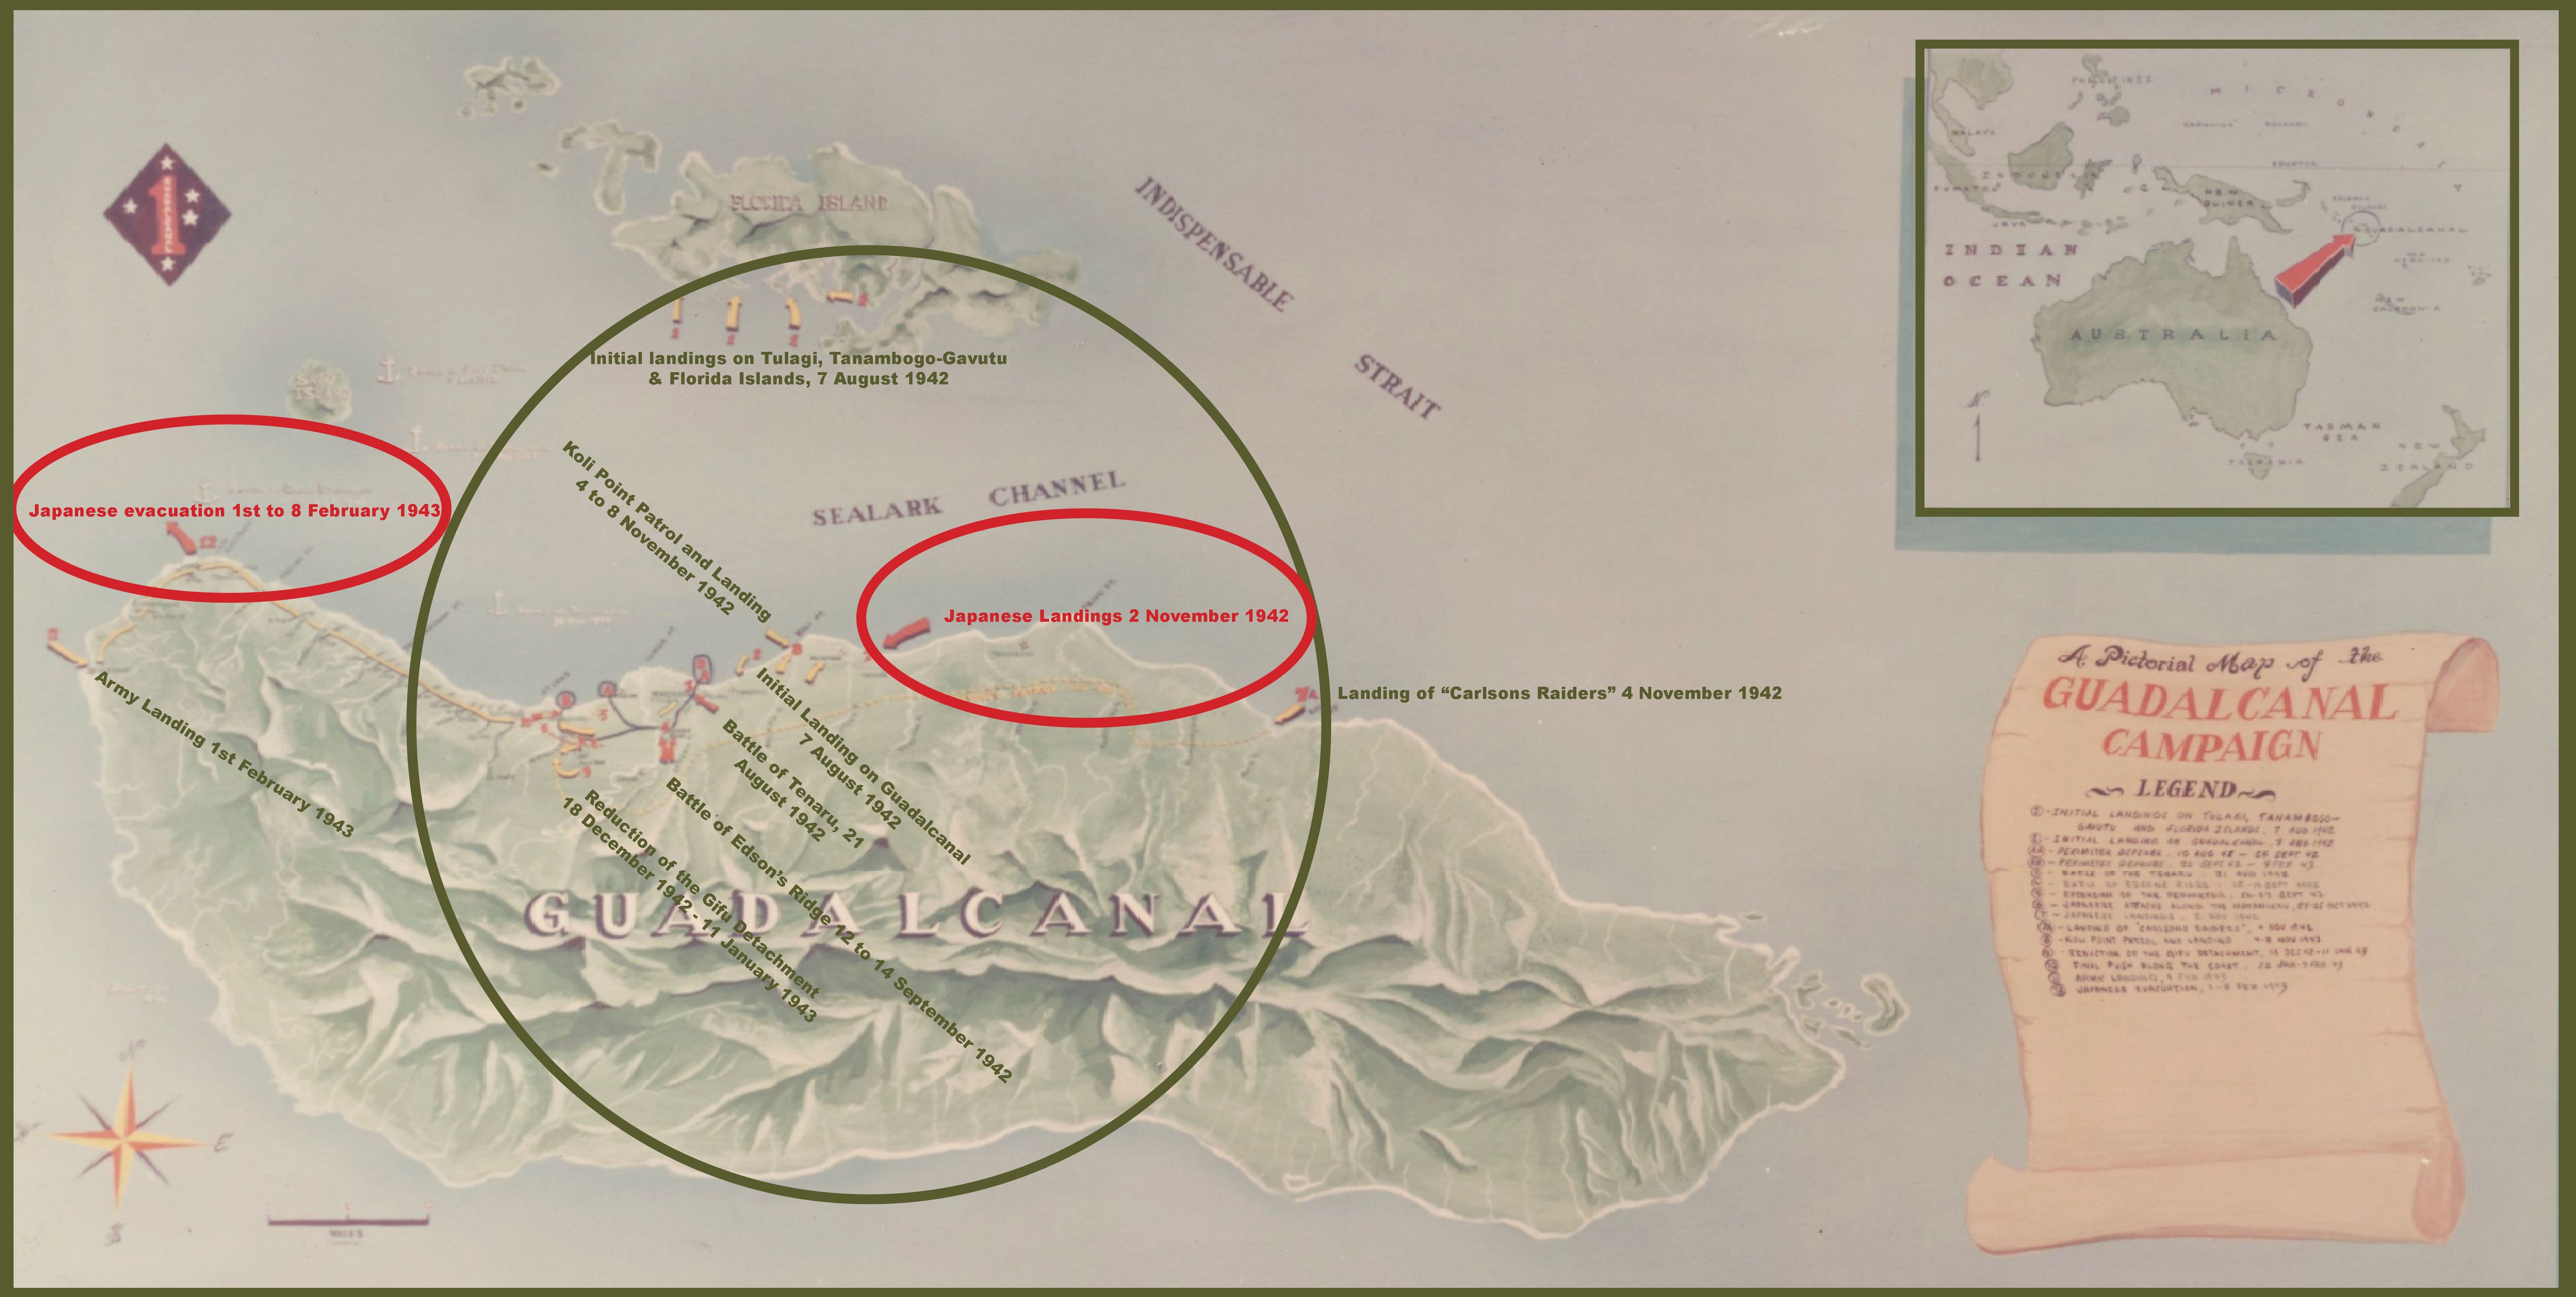 Guadalcanal campaign final